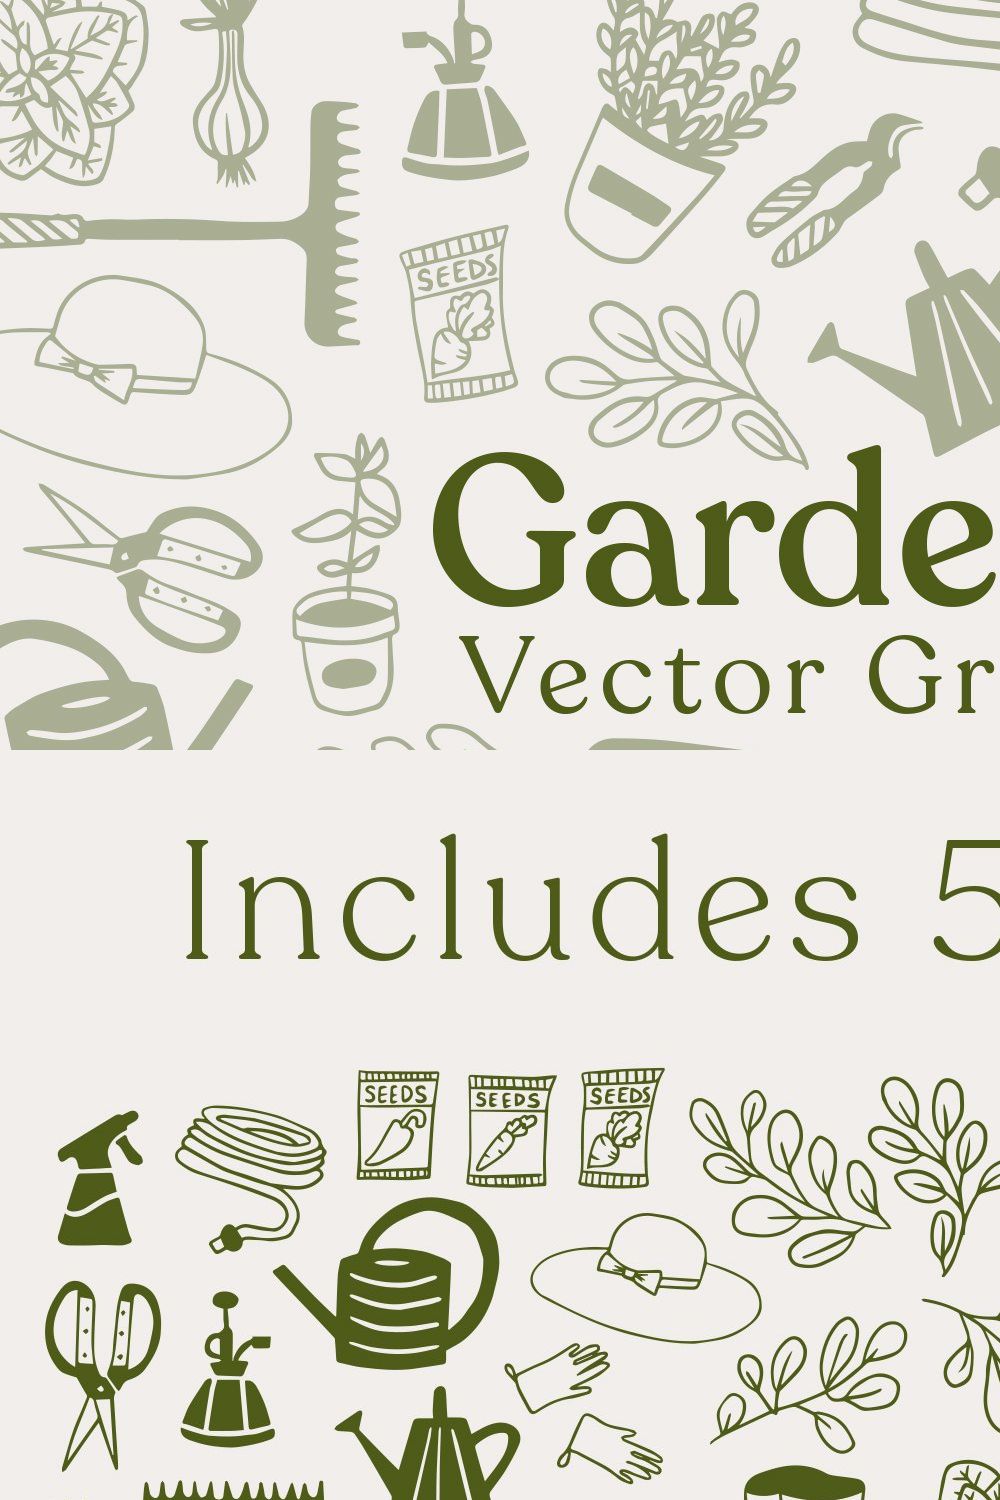 Gardening Vector Graphics pinterest preview image.